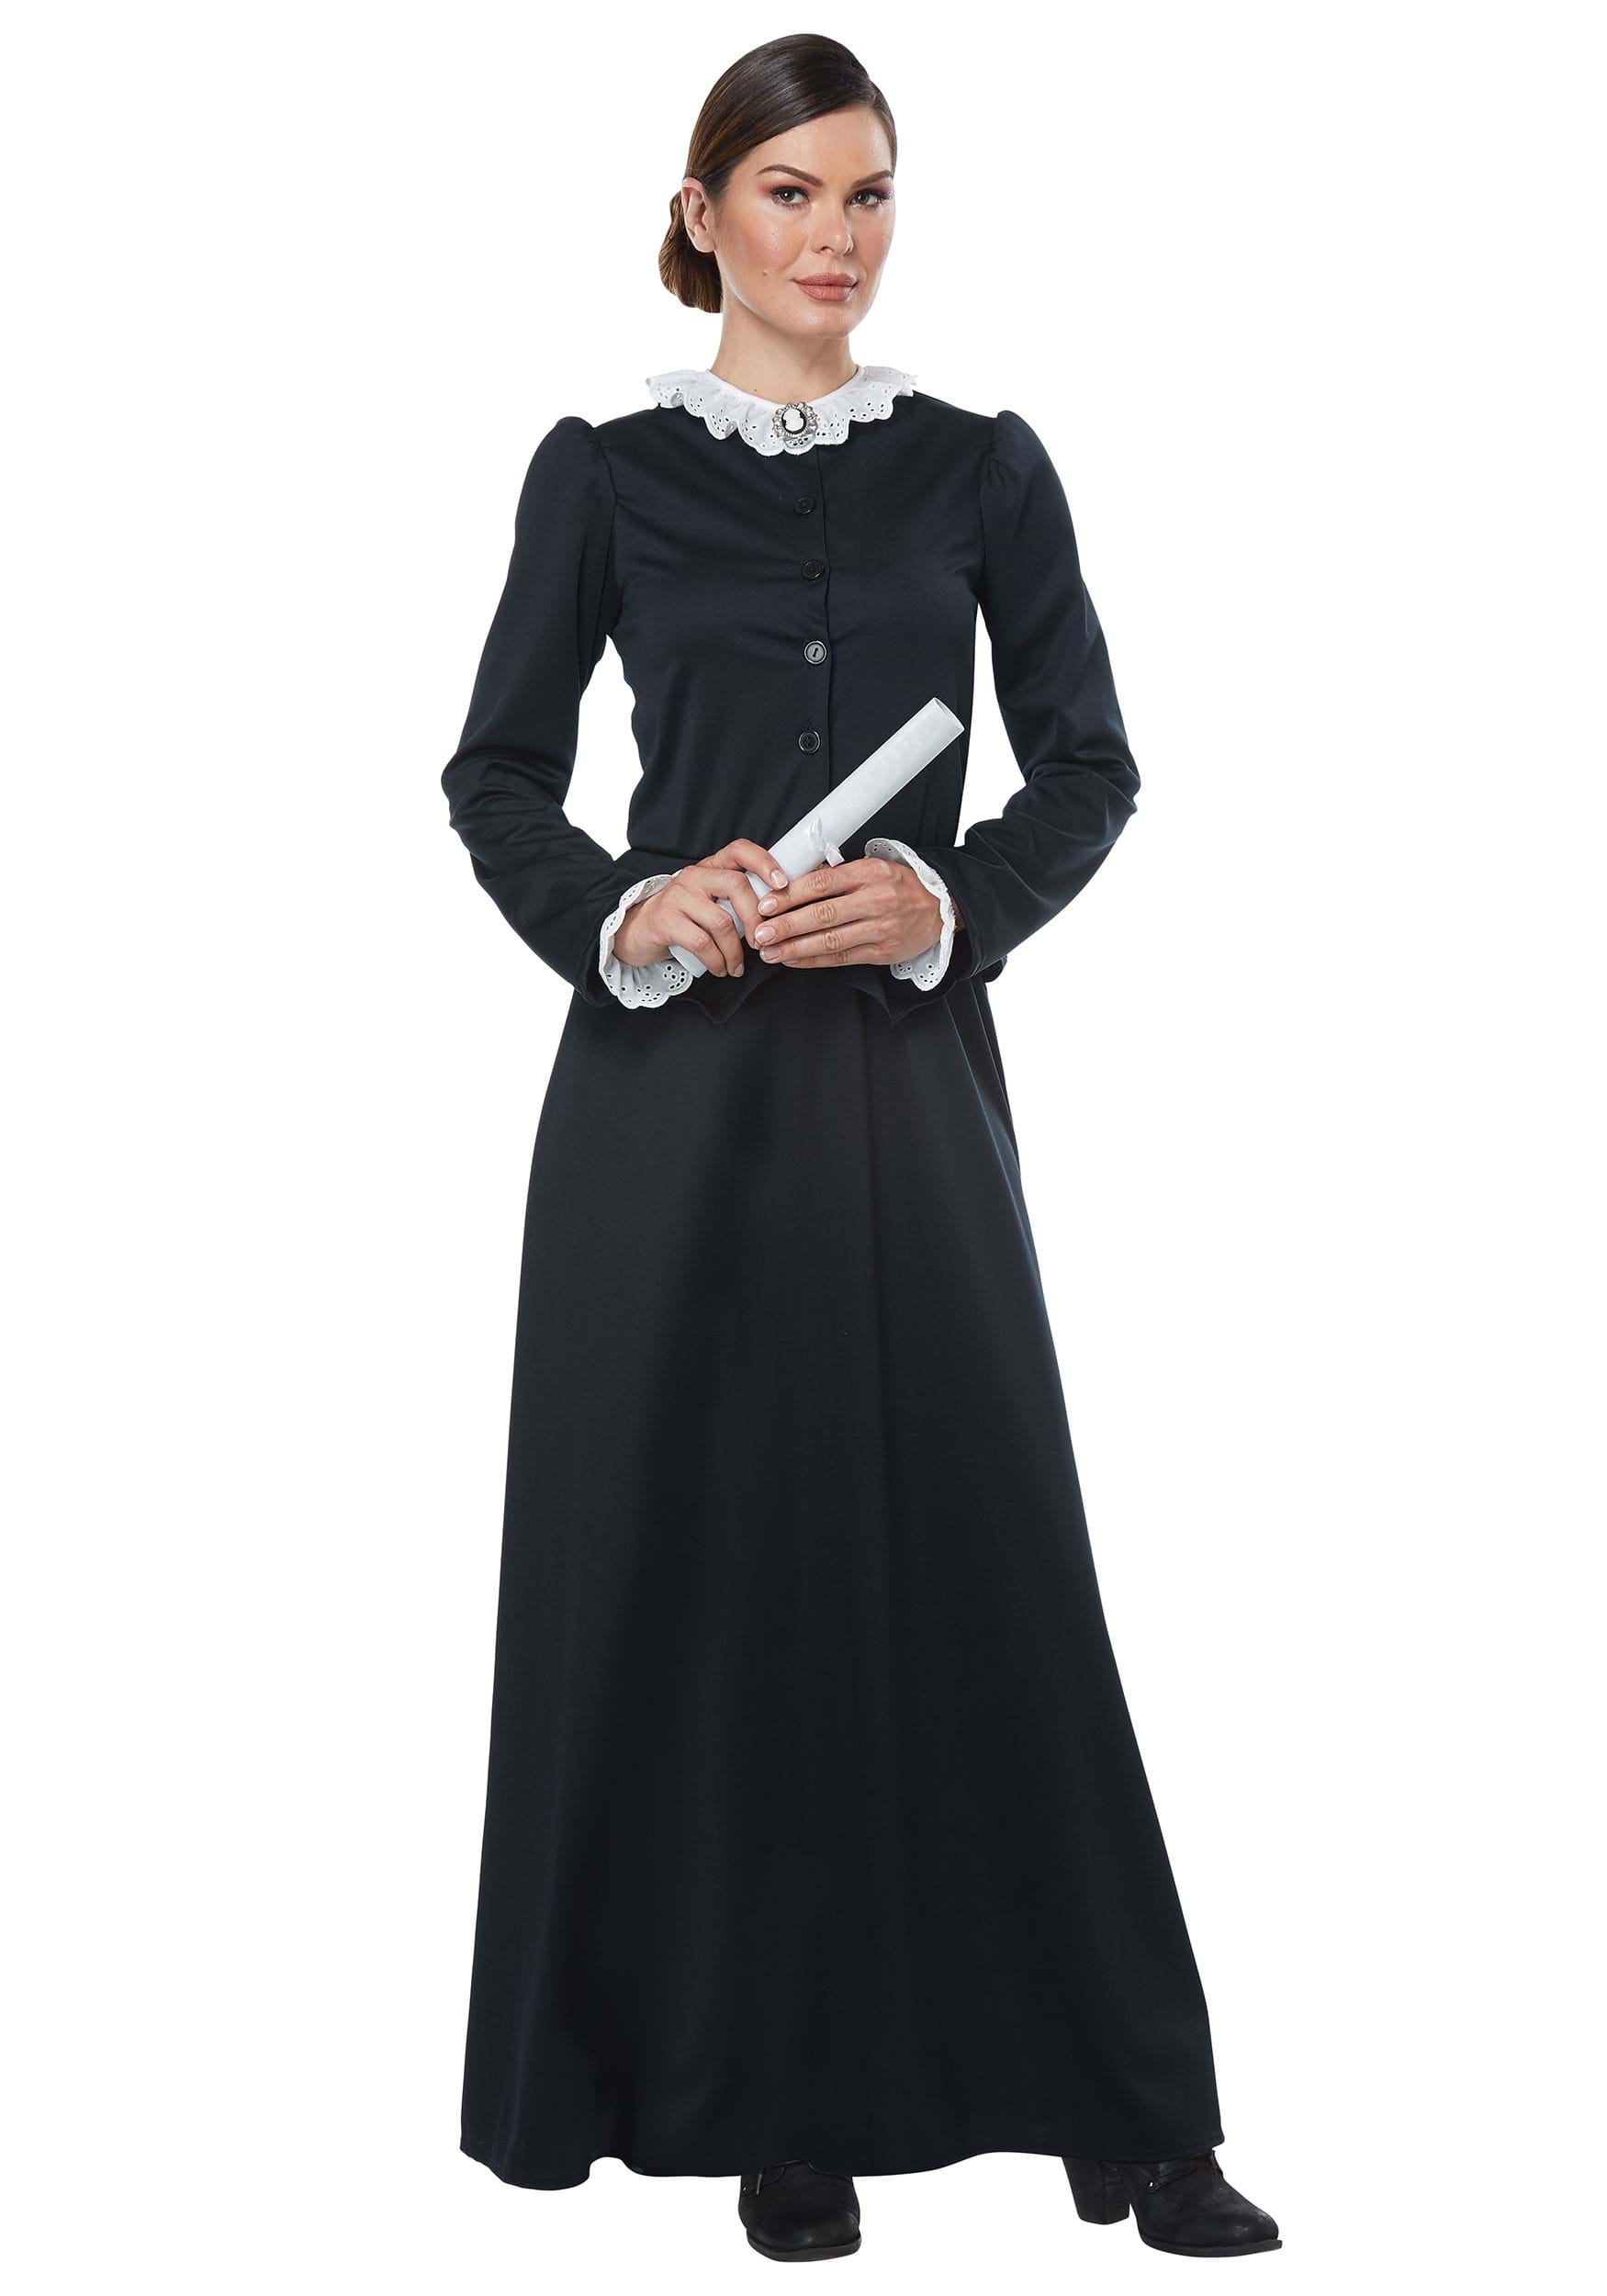 Susan B. Anthony / Harriet Tubman Women's Fancy Dress Costume